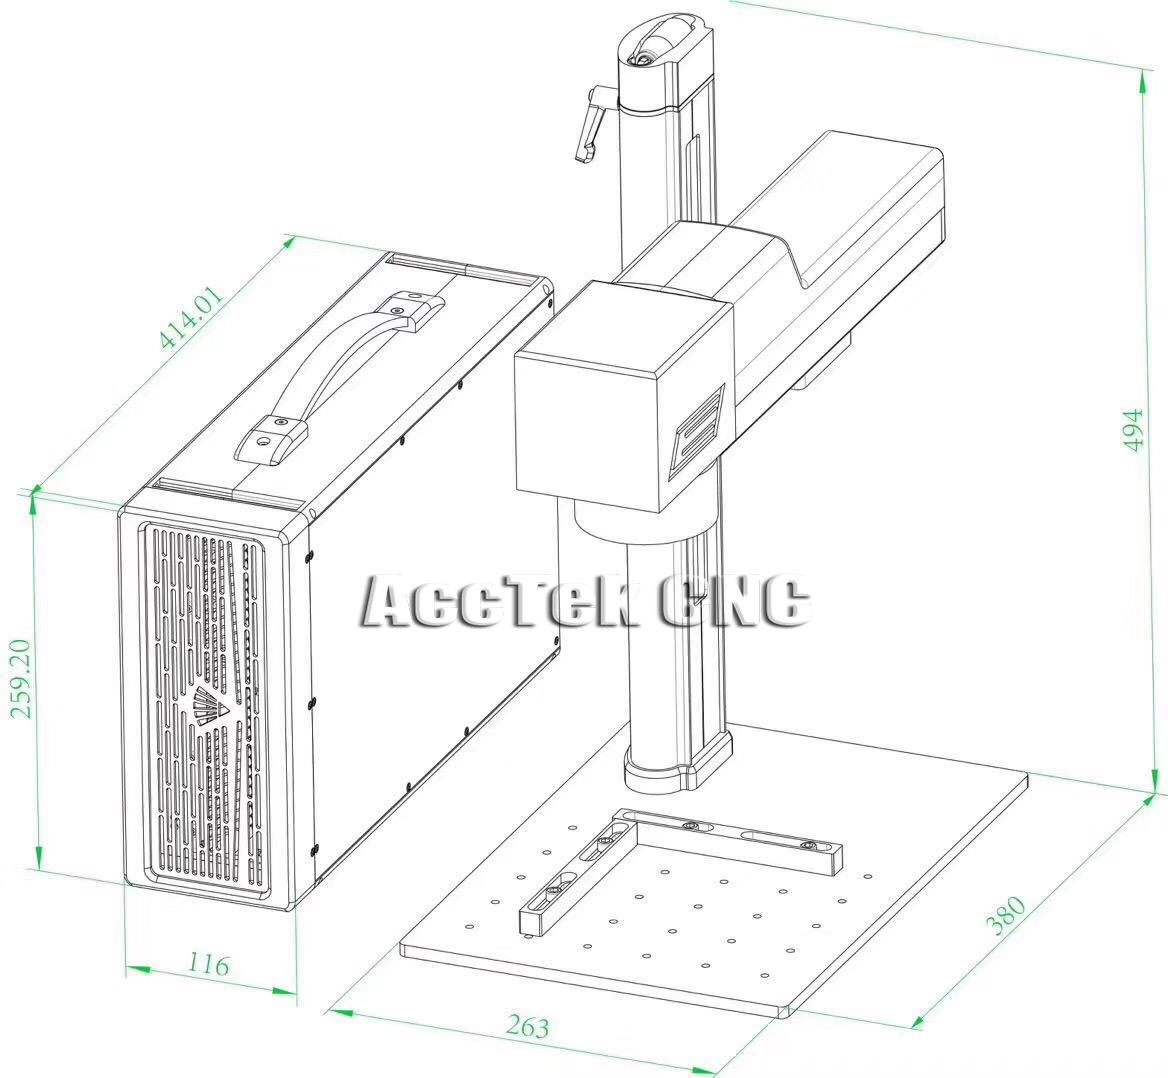 Acctek cheapmetal fiber laser makrking machine 20W mimi portable fiber laser cnc 5